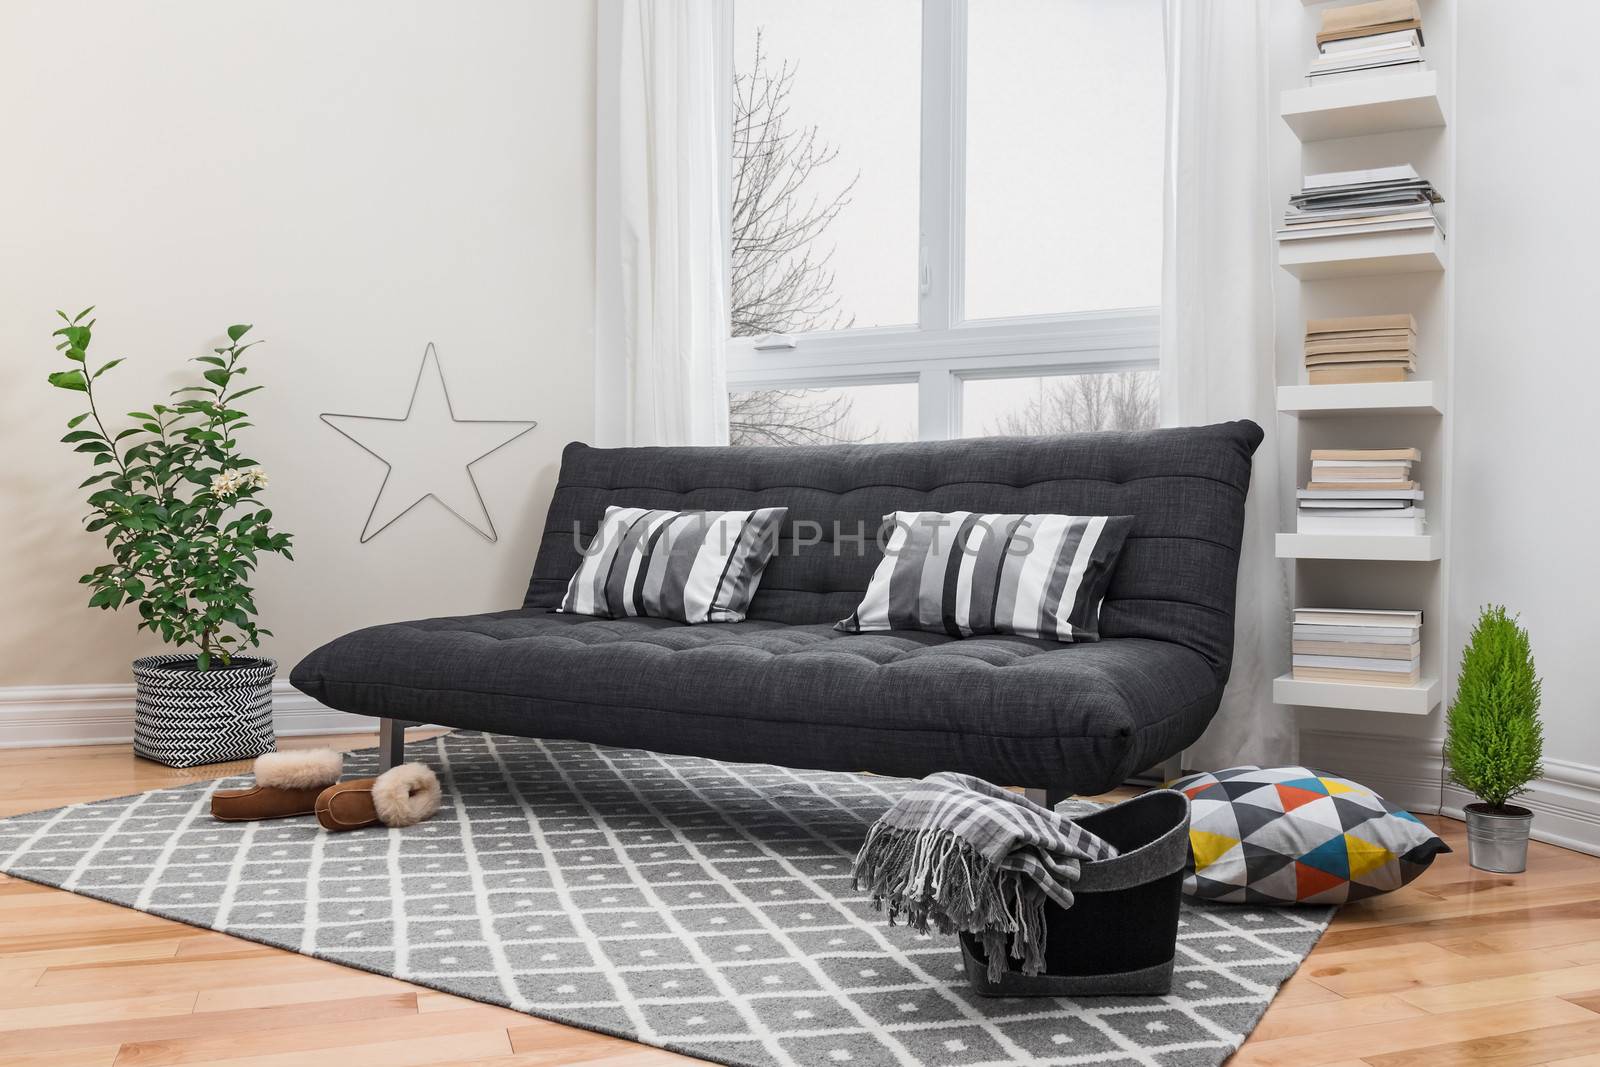 Spacious living room with modern decor by anikasalsera